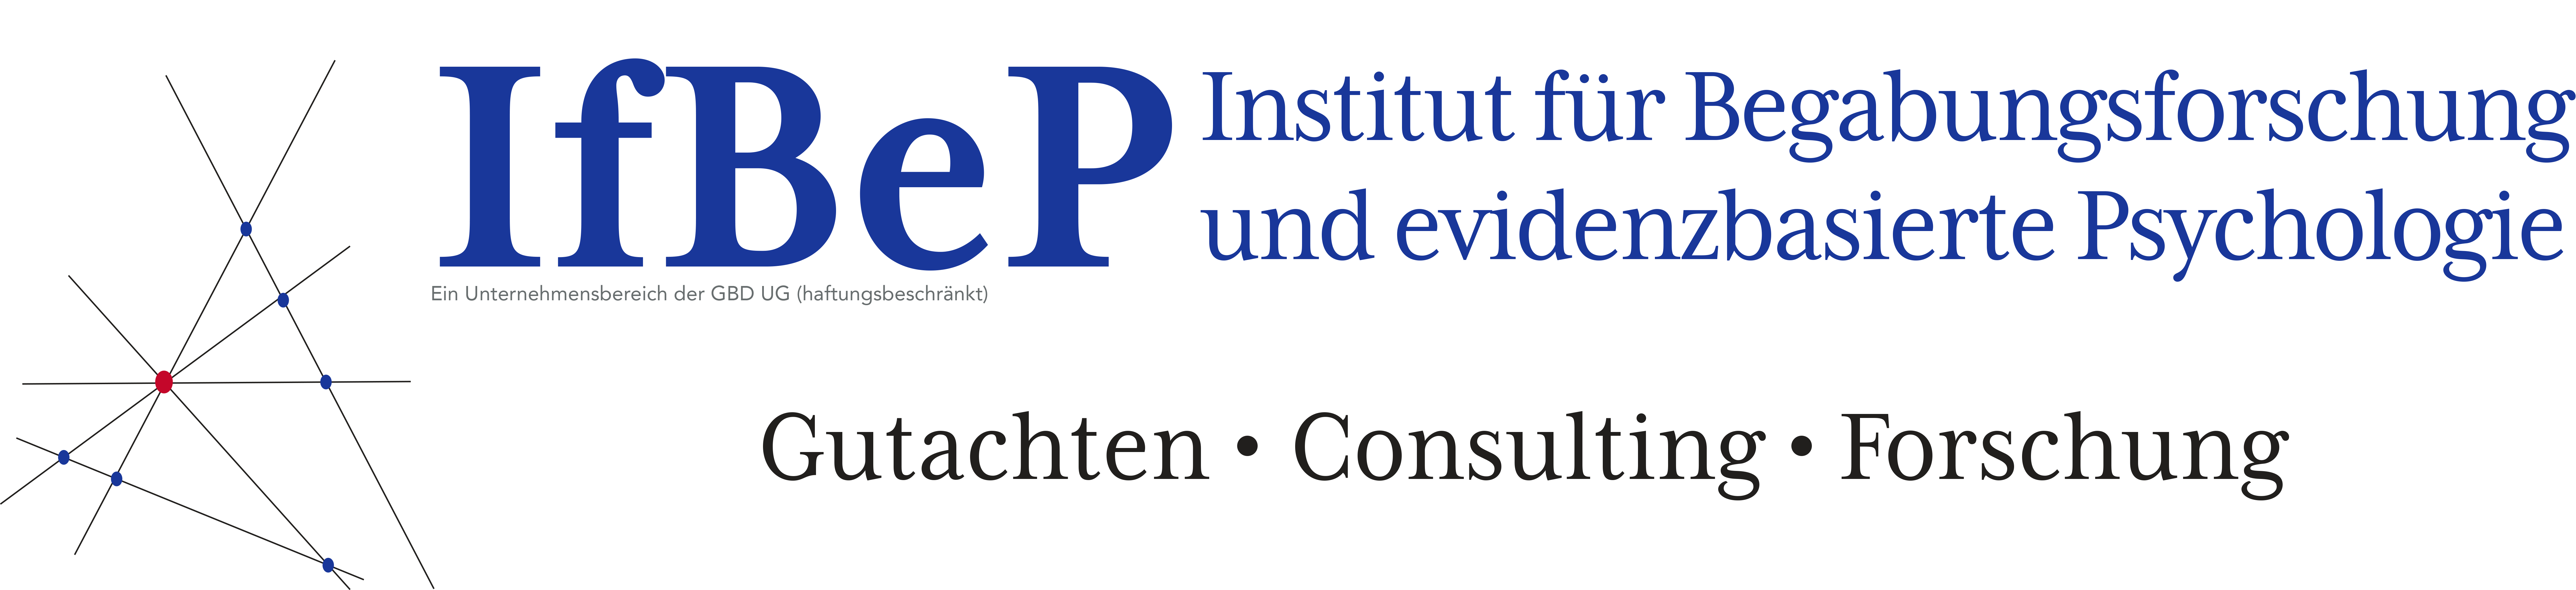 IfBeP - Logo